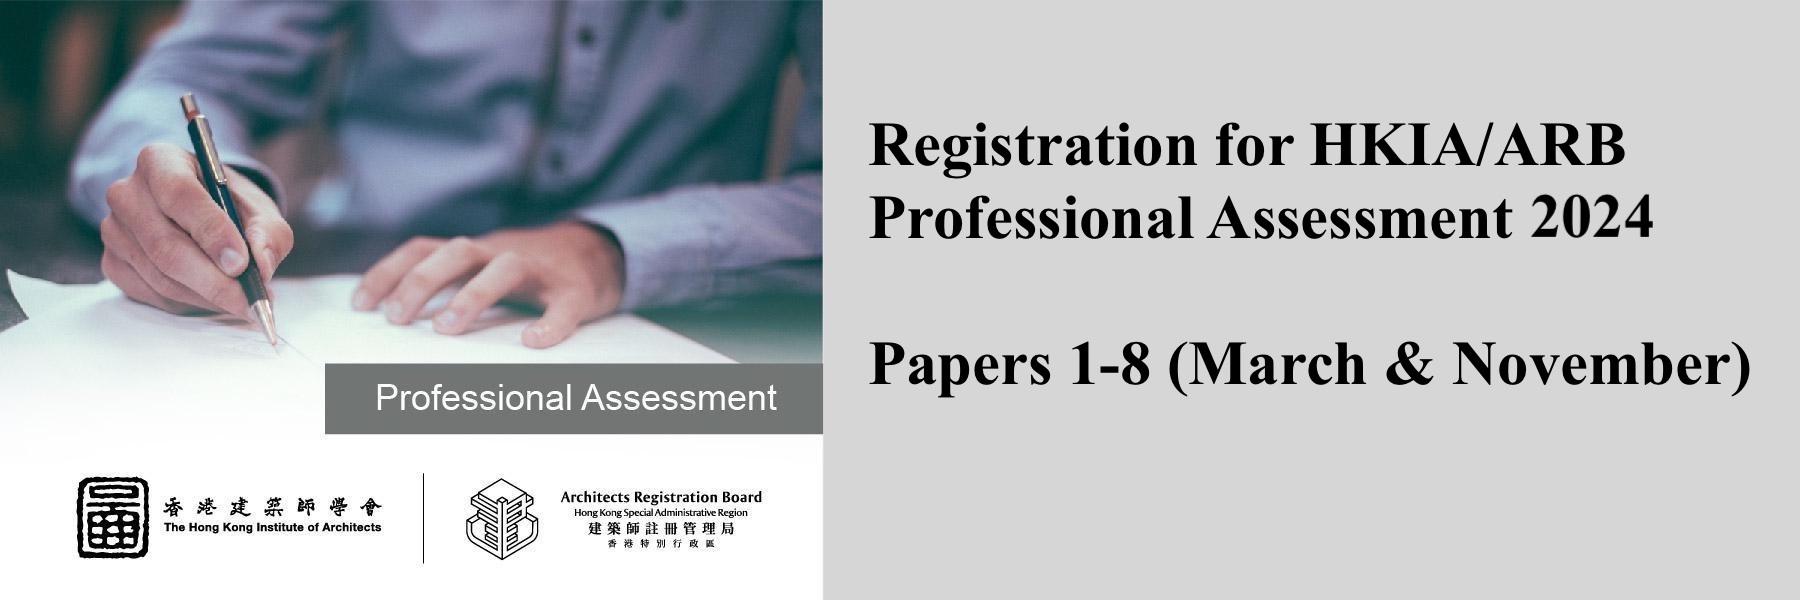 Registration for HKIA/ARB Professional Assessment  2024 – Papers 1 - 8  (June & November)